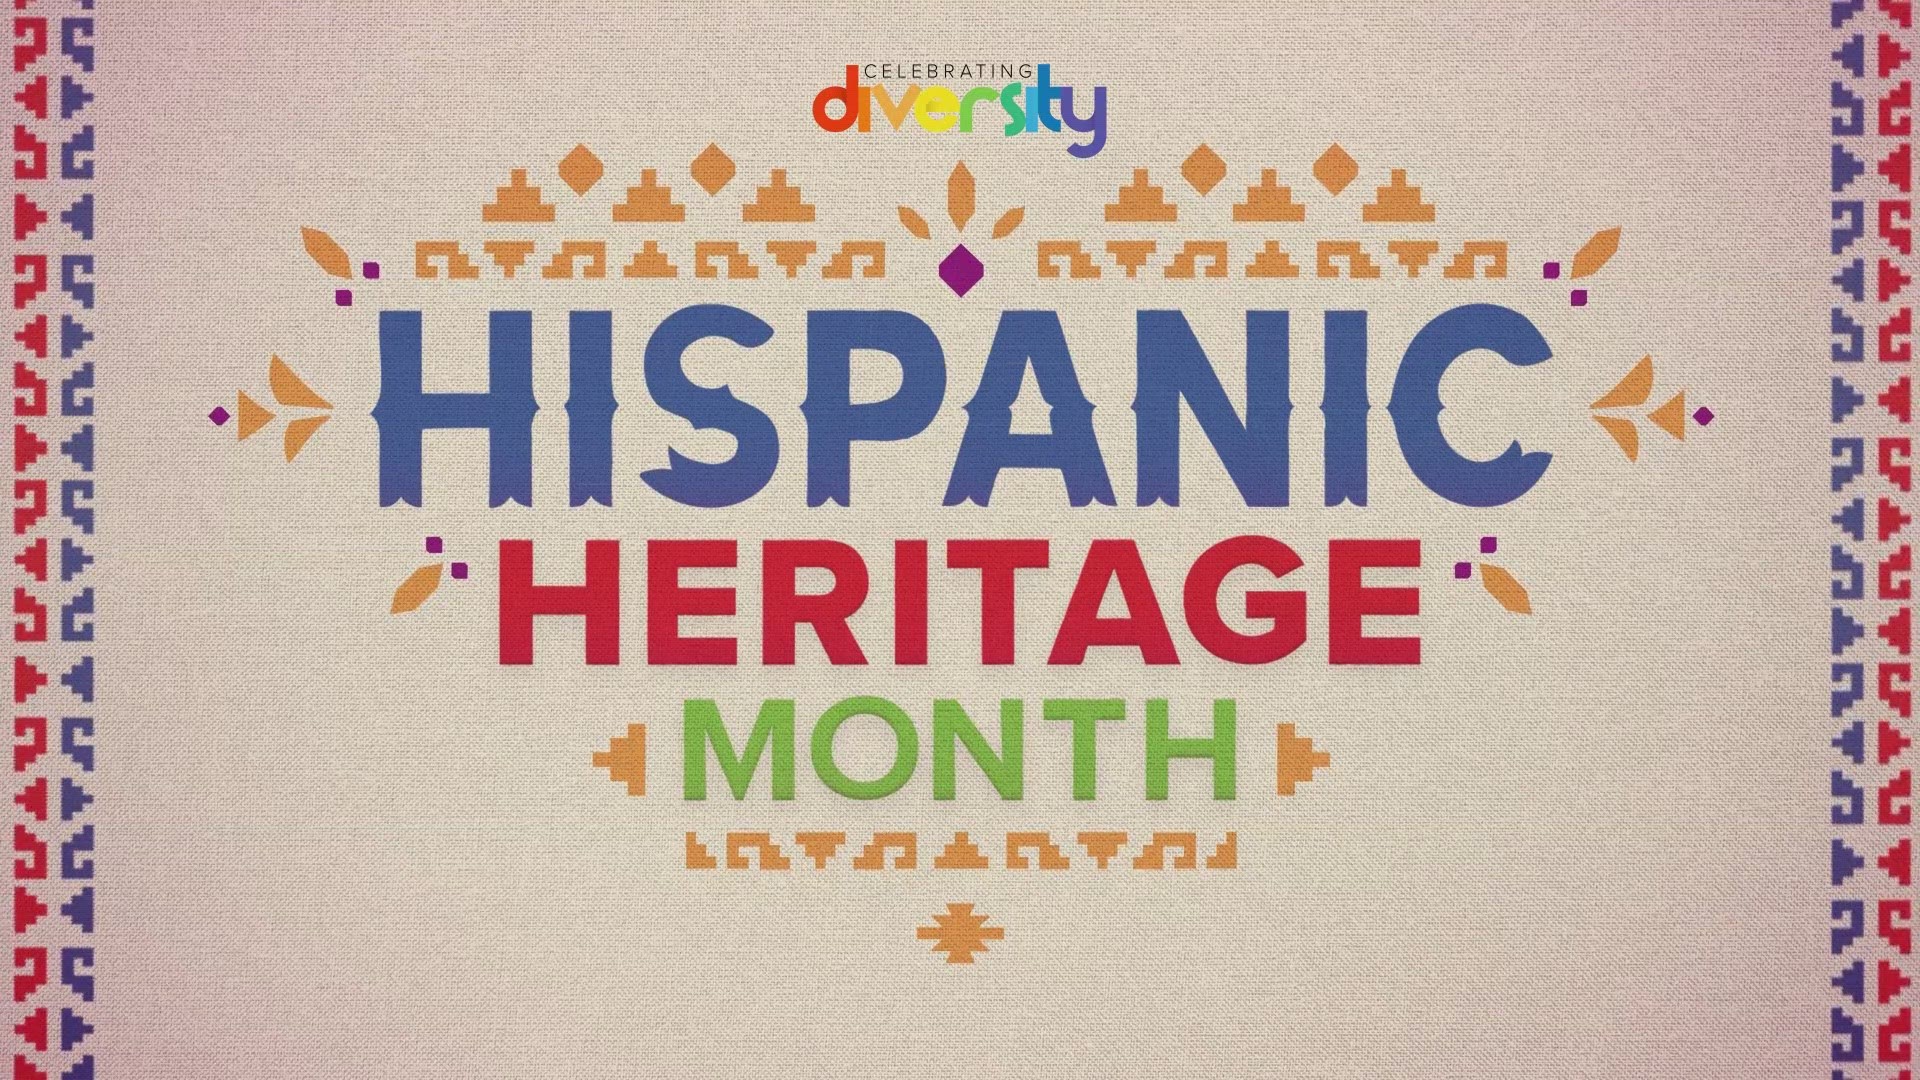 Hispanic Heritage month is celebrated through Oct. 15.